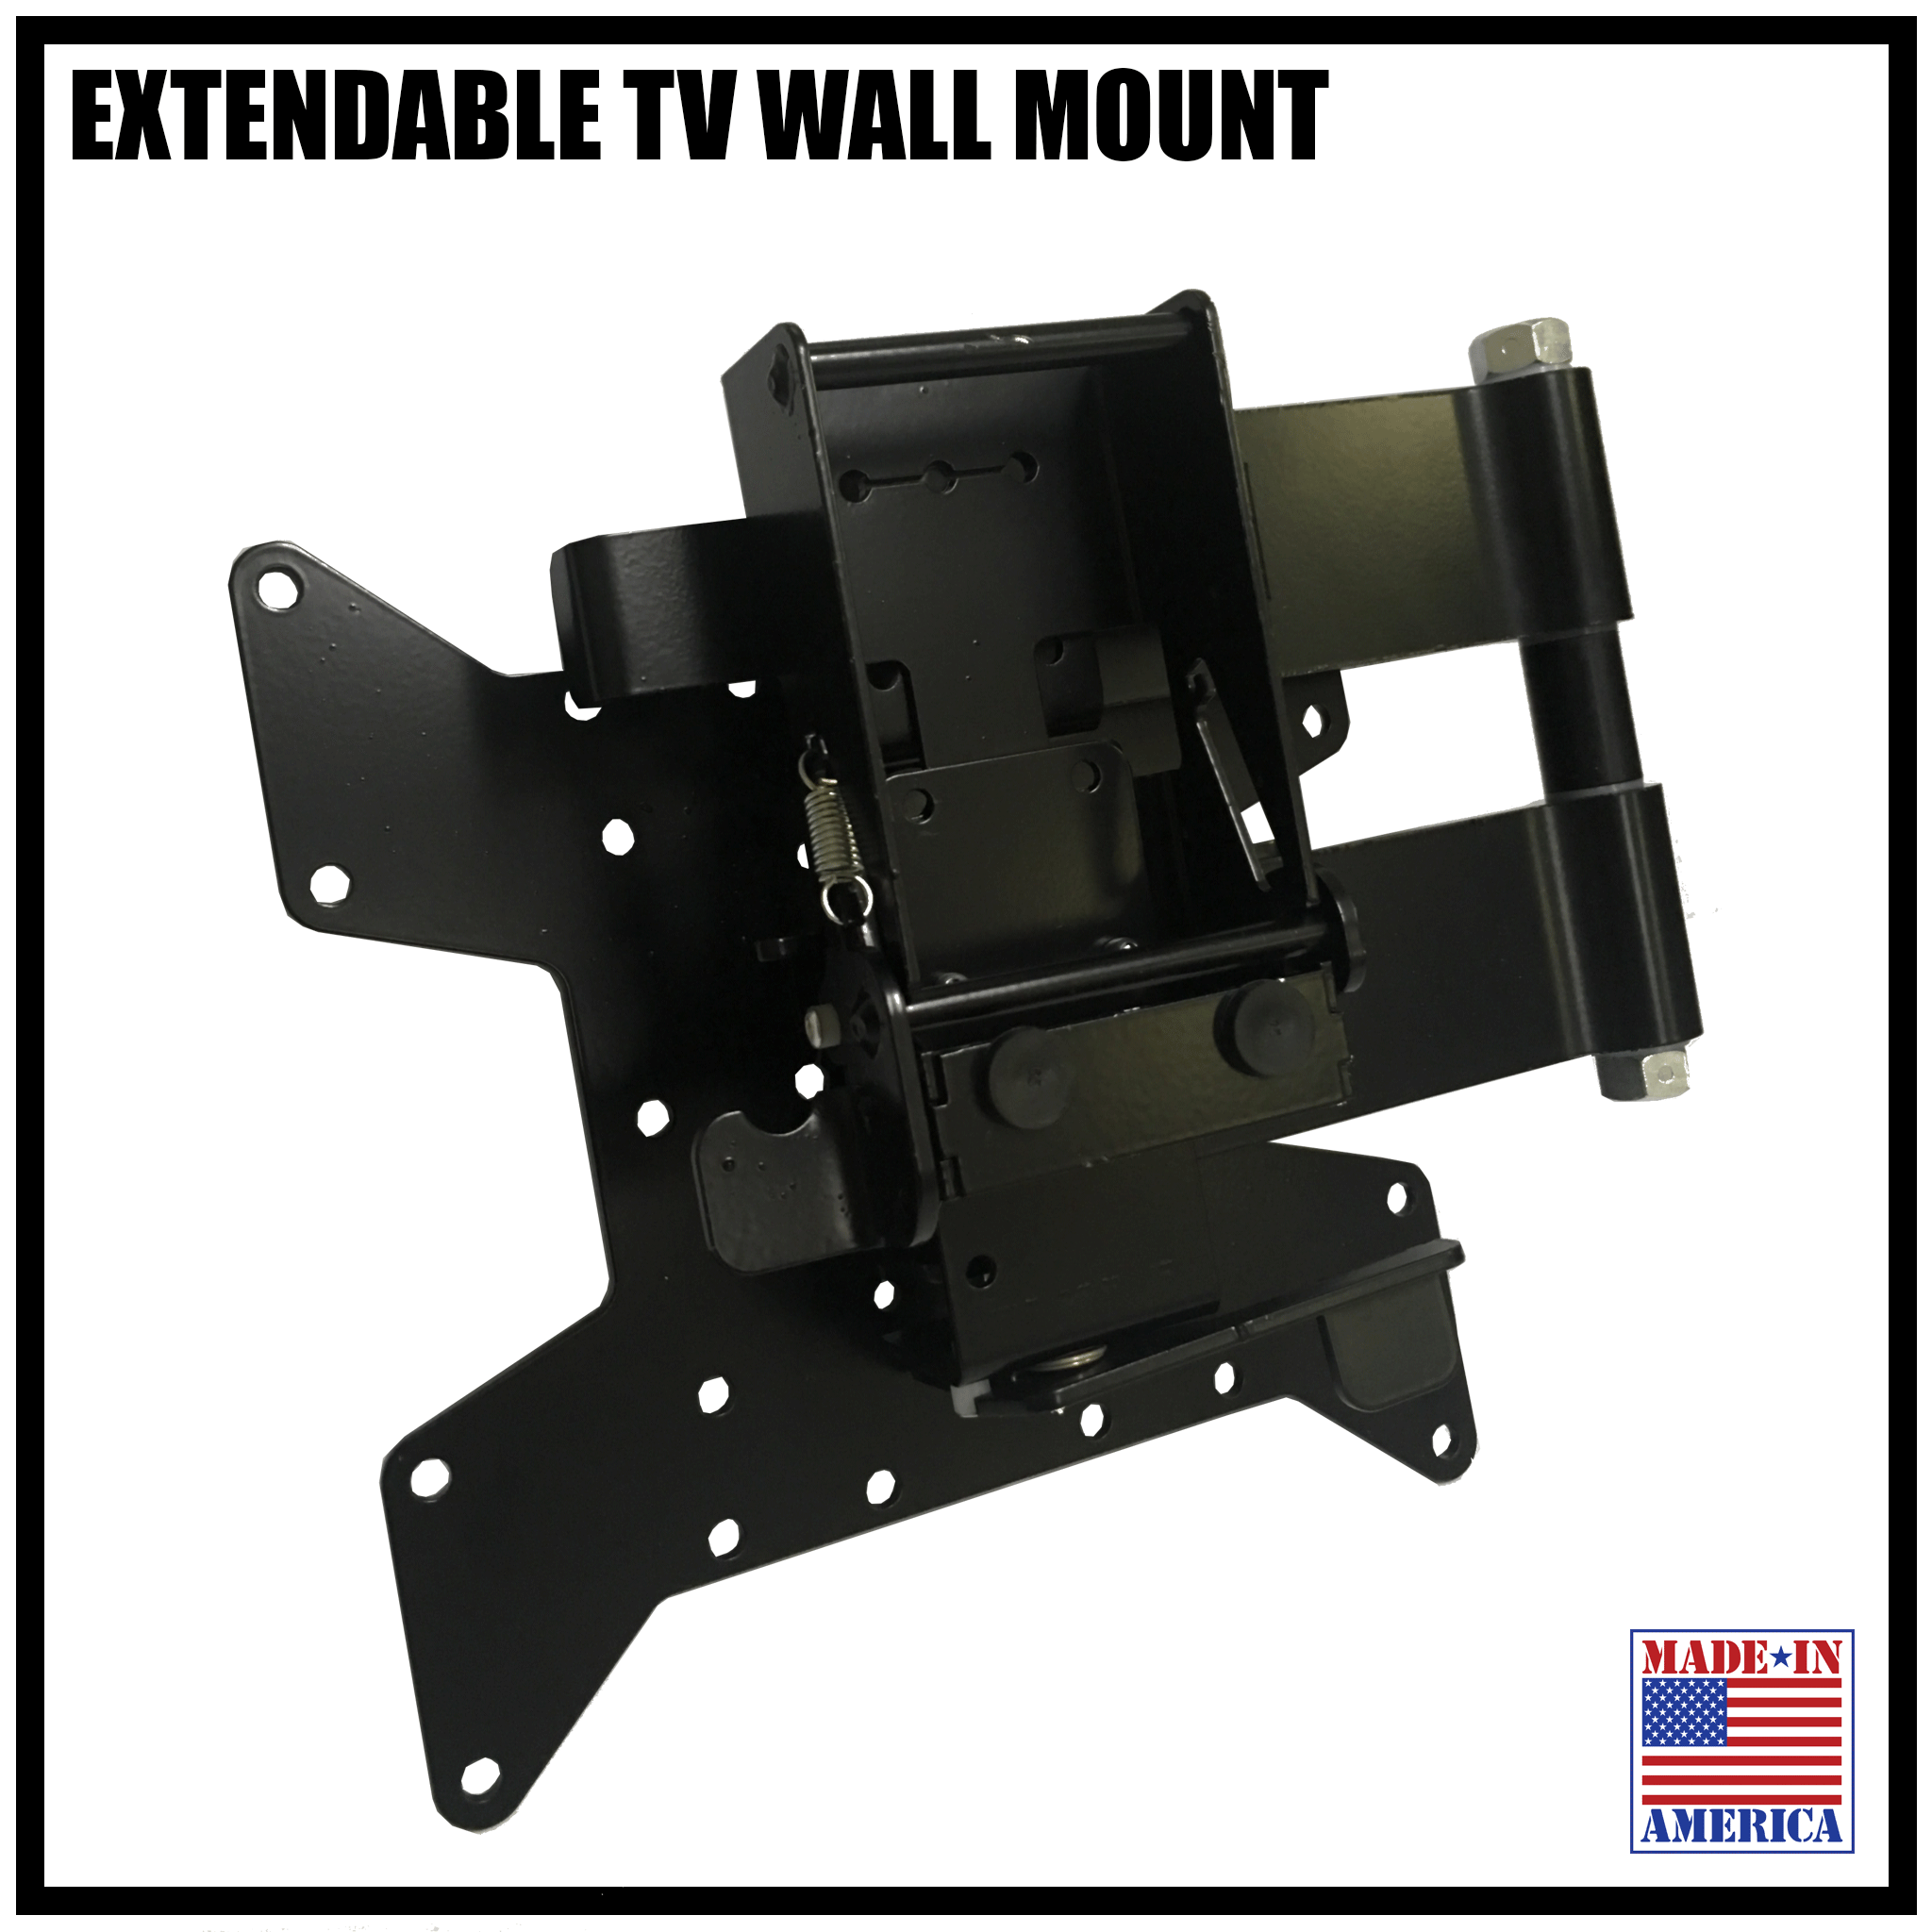 Extendable TV Wall Mount, Kebloc mount w/locking mechanism, 1019214